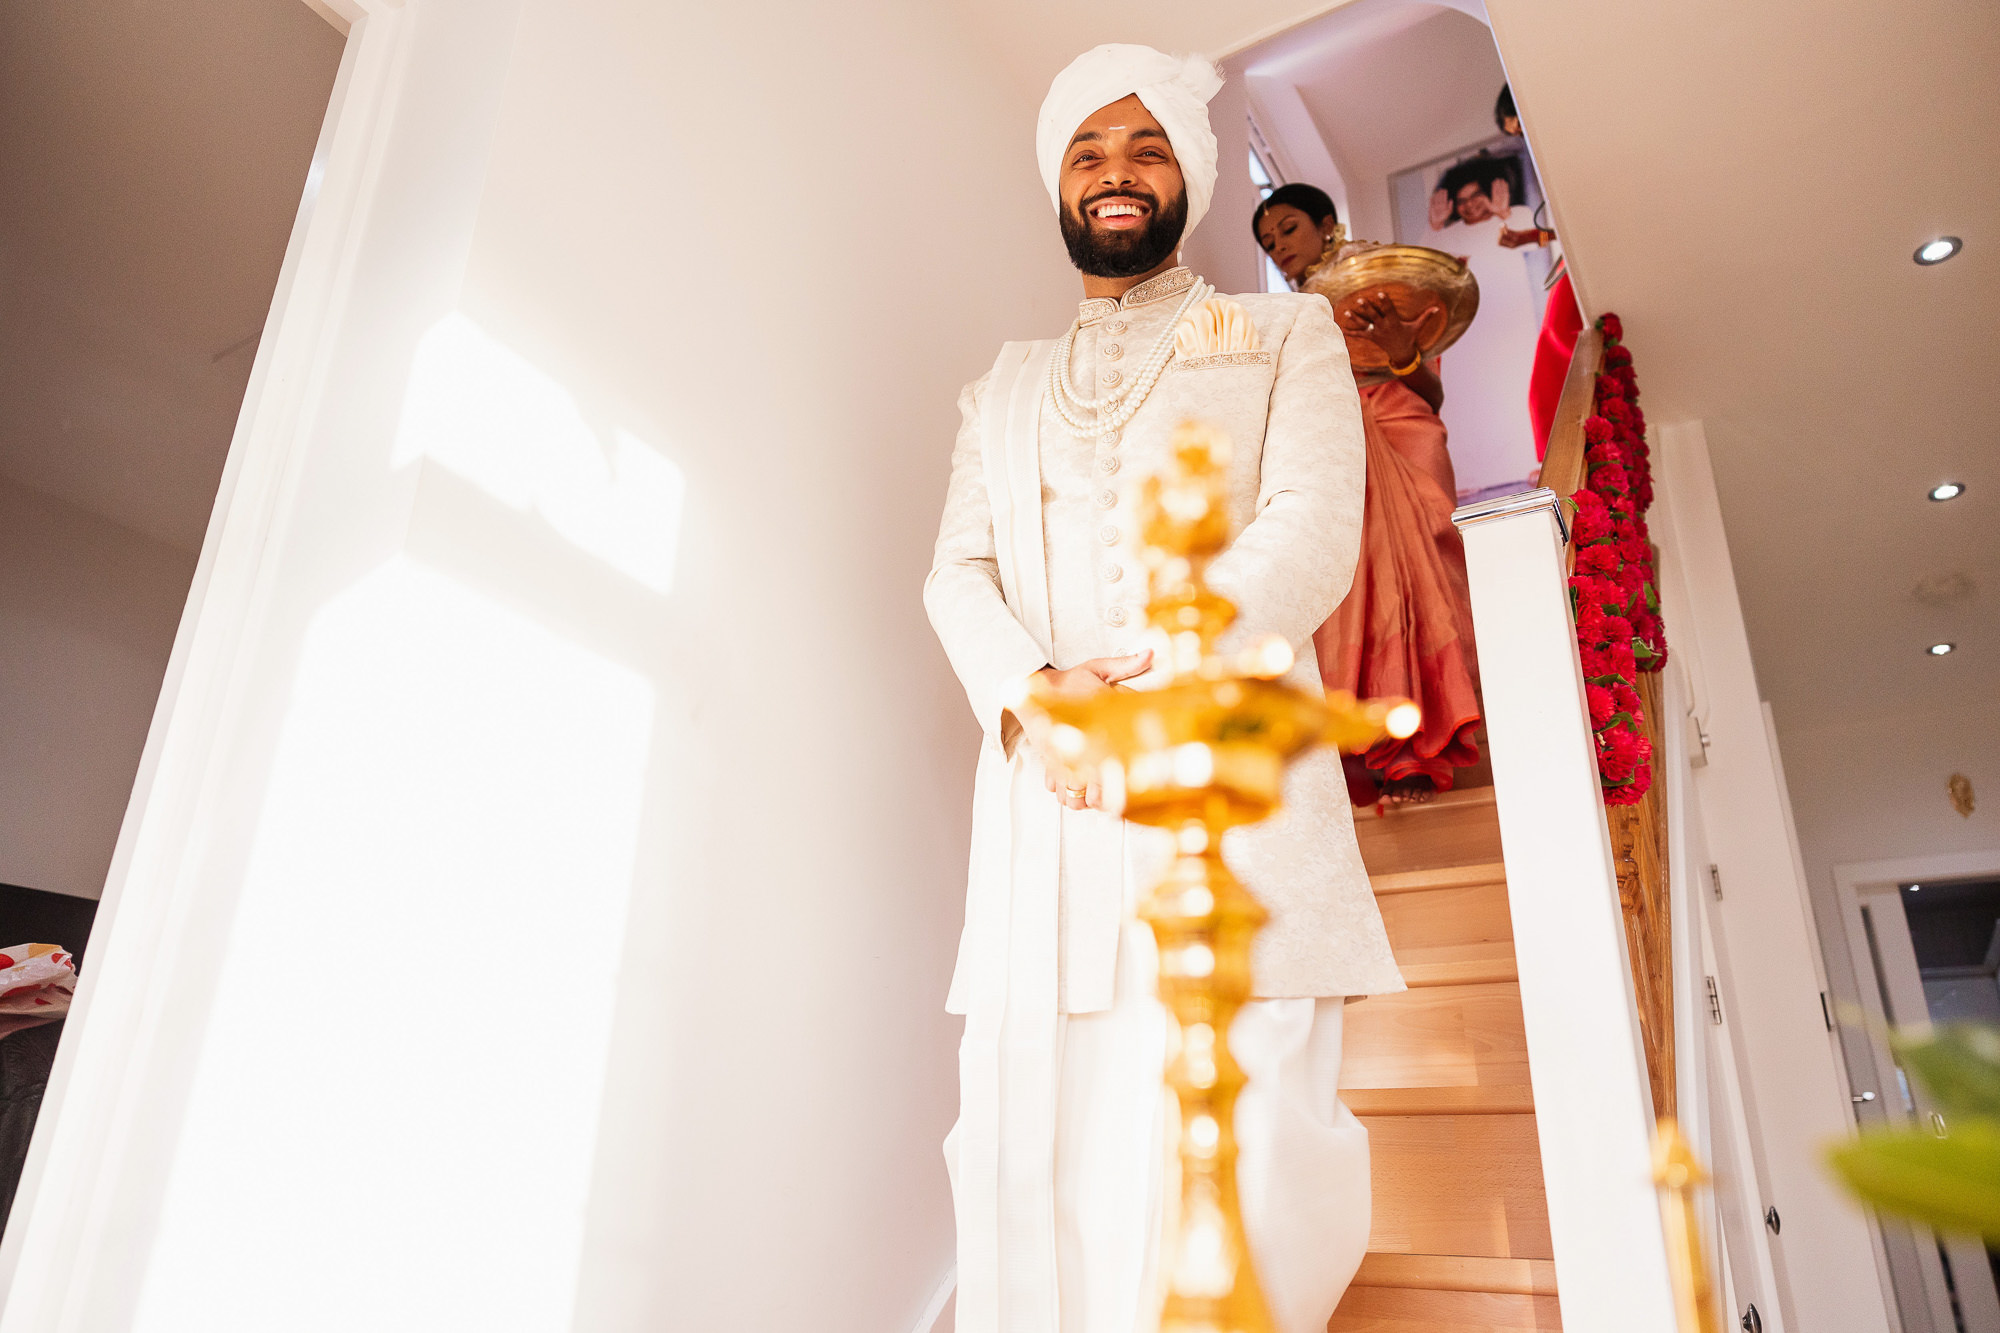 Tamil Wedding, Tamil Wedding Photographer, Stockley Park, Religious ceremony, groom getting ready